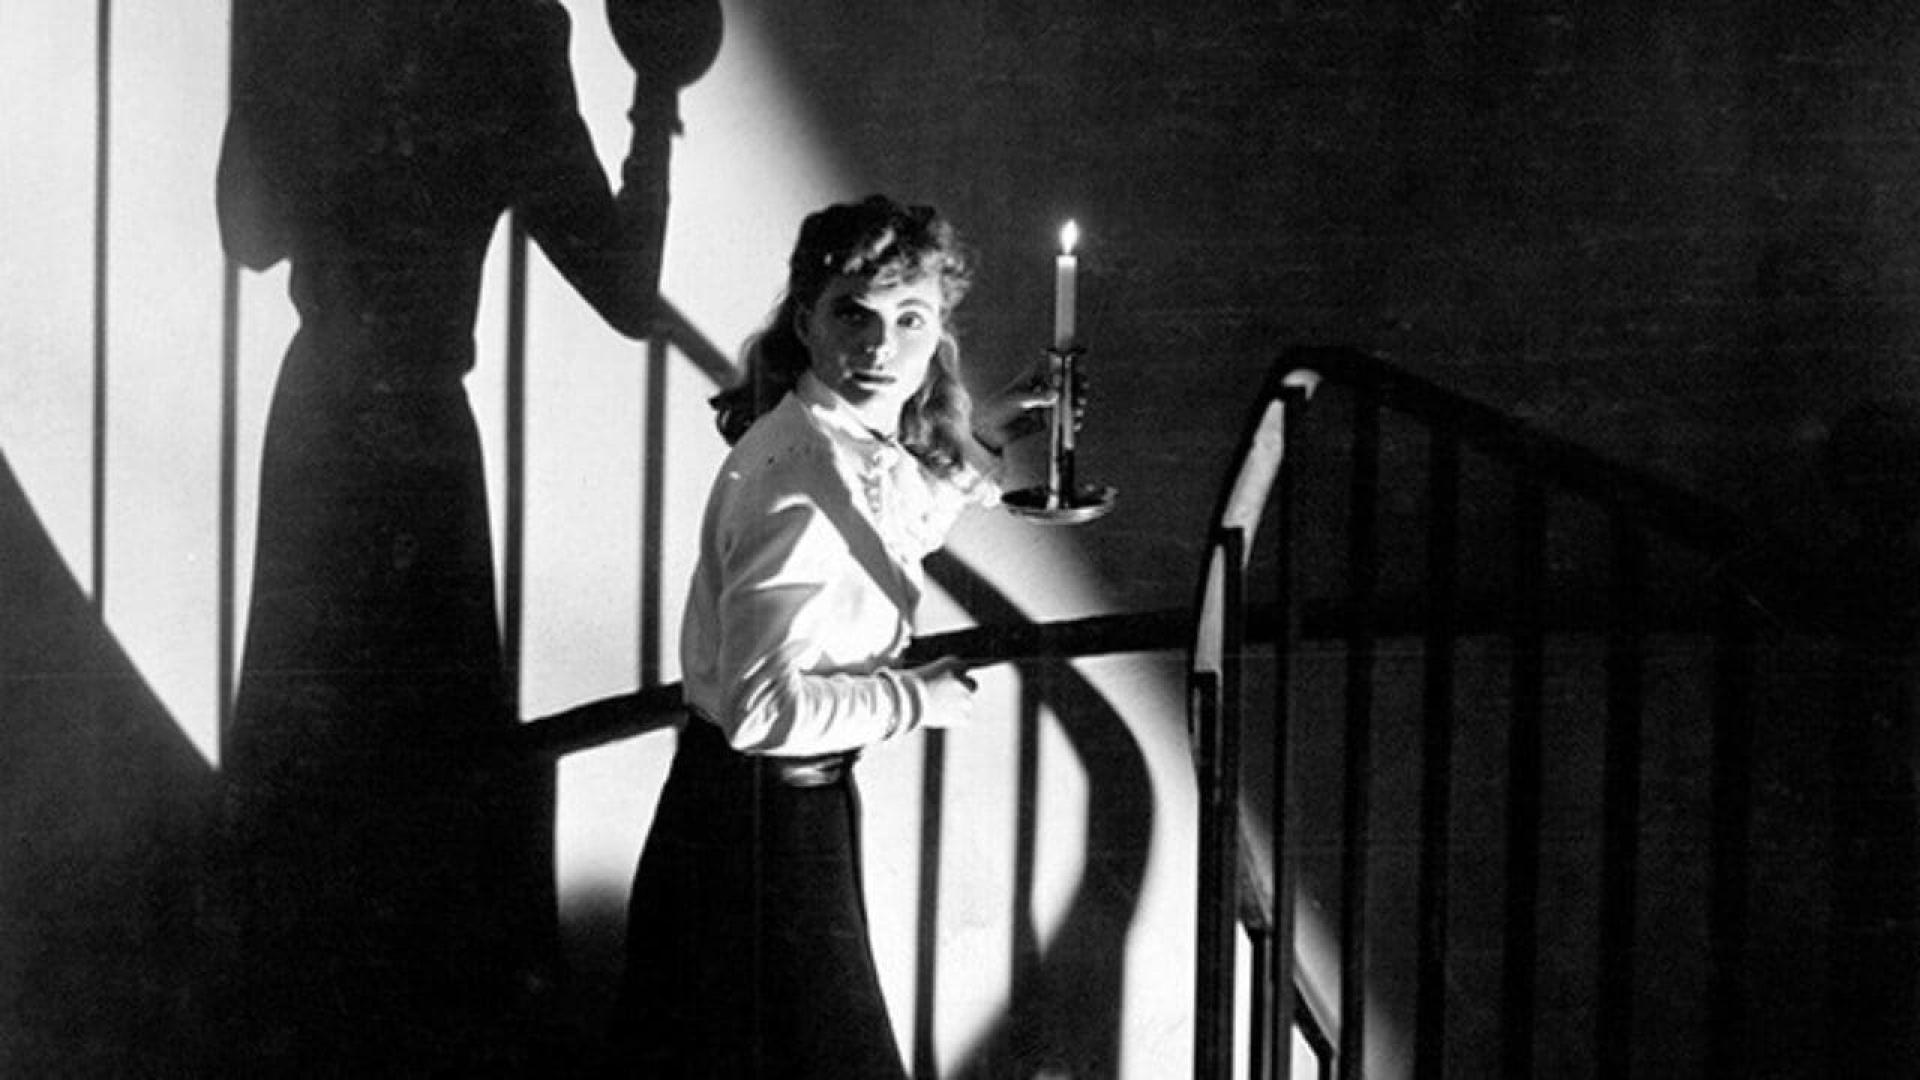 دانلود فیلم The Spiral Staircase 1946